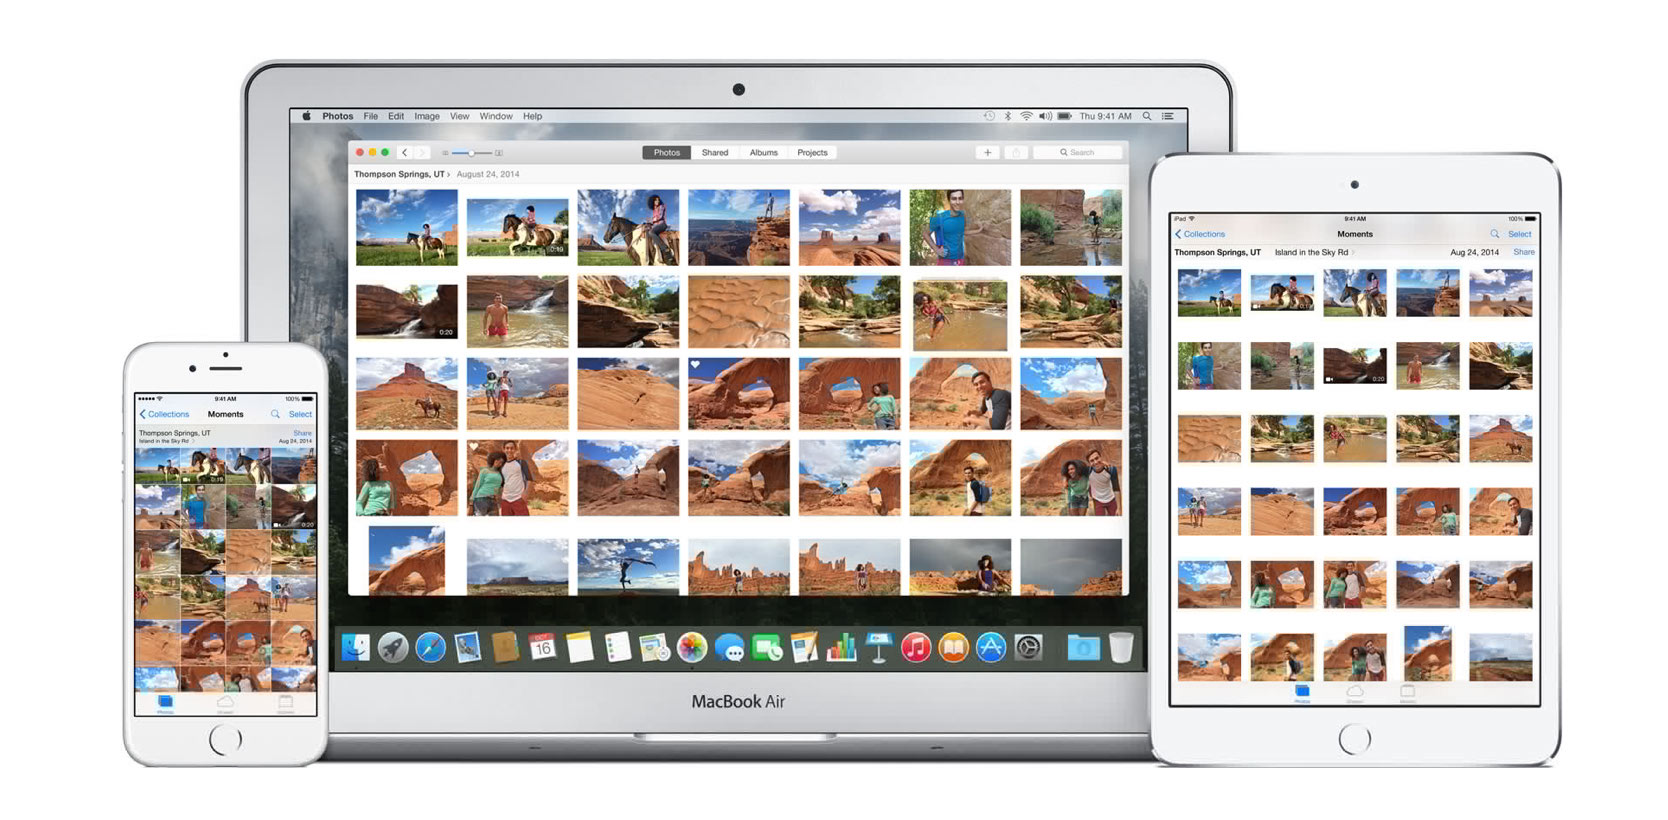 icloud photo library - OS X iOS